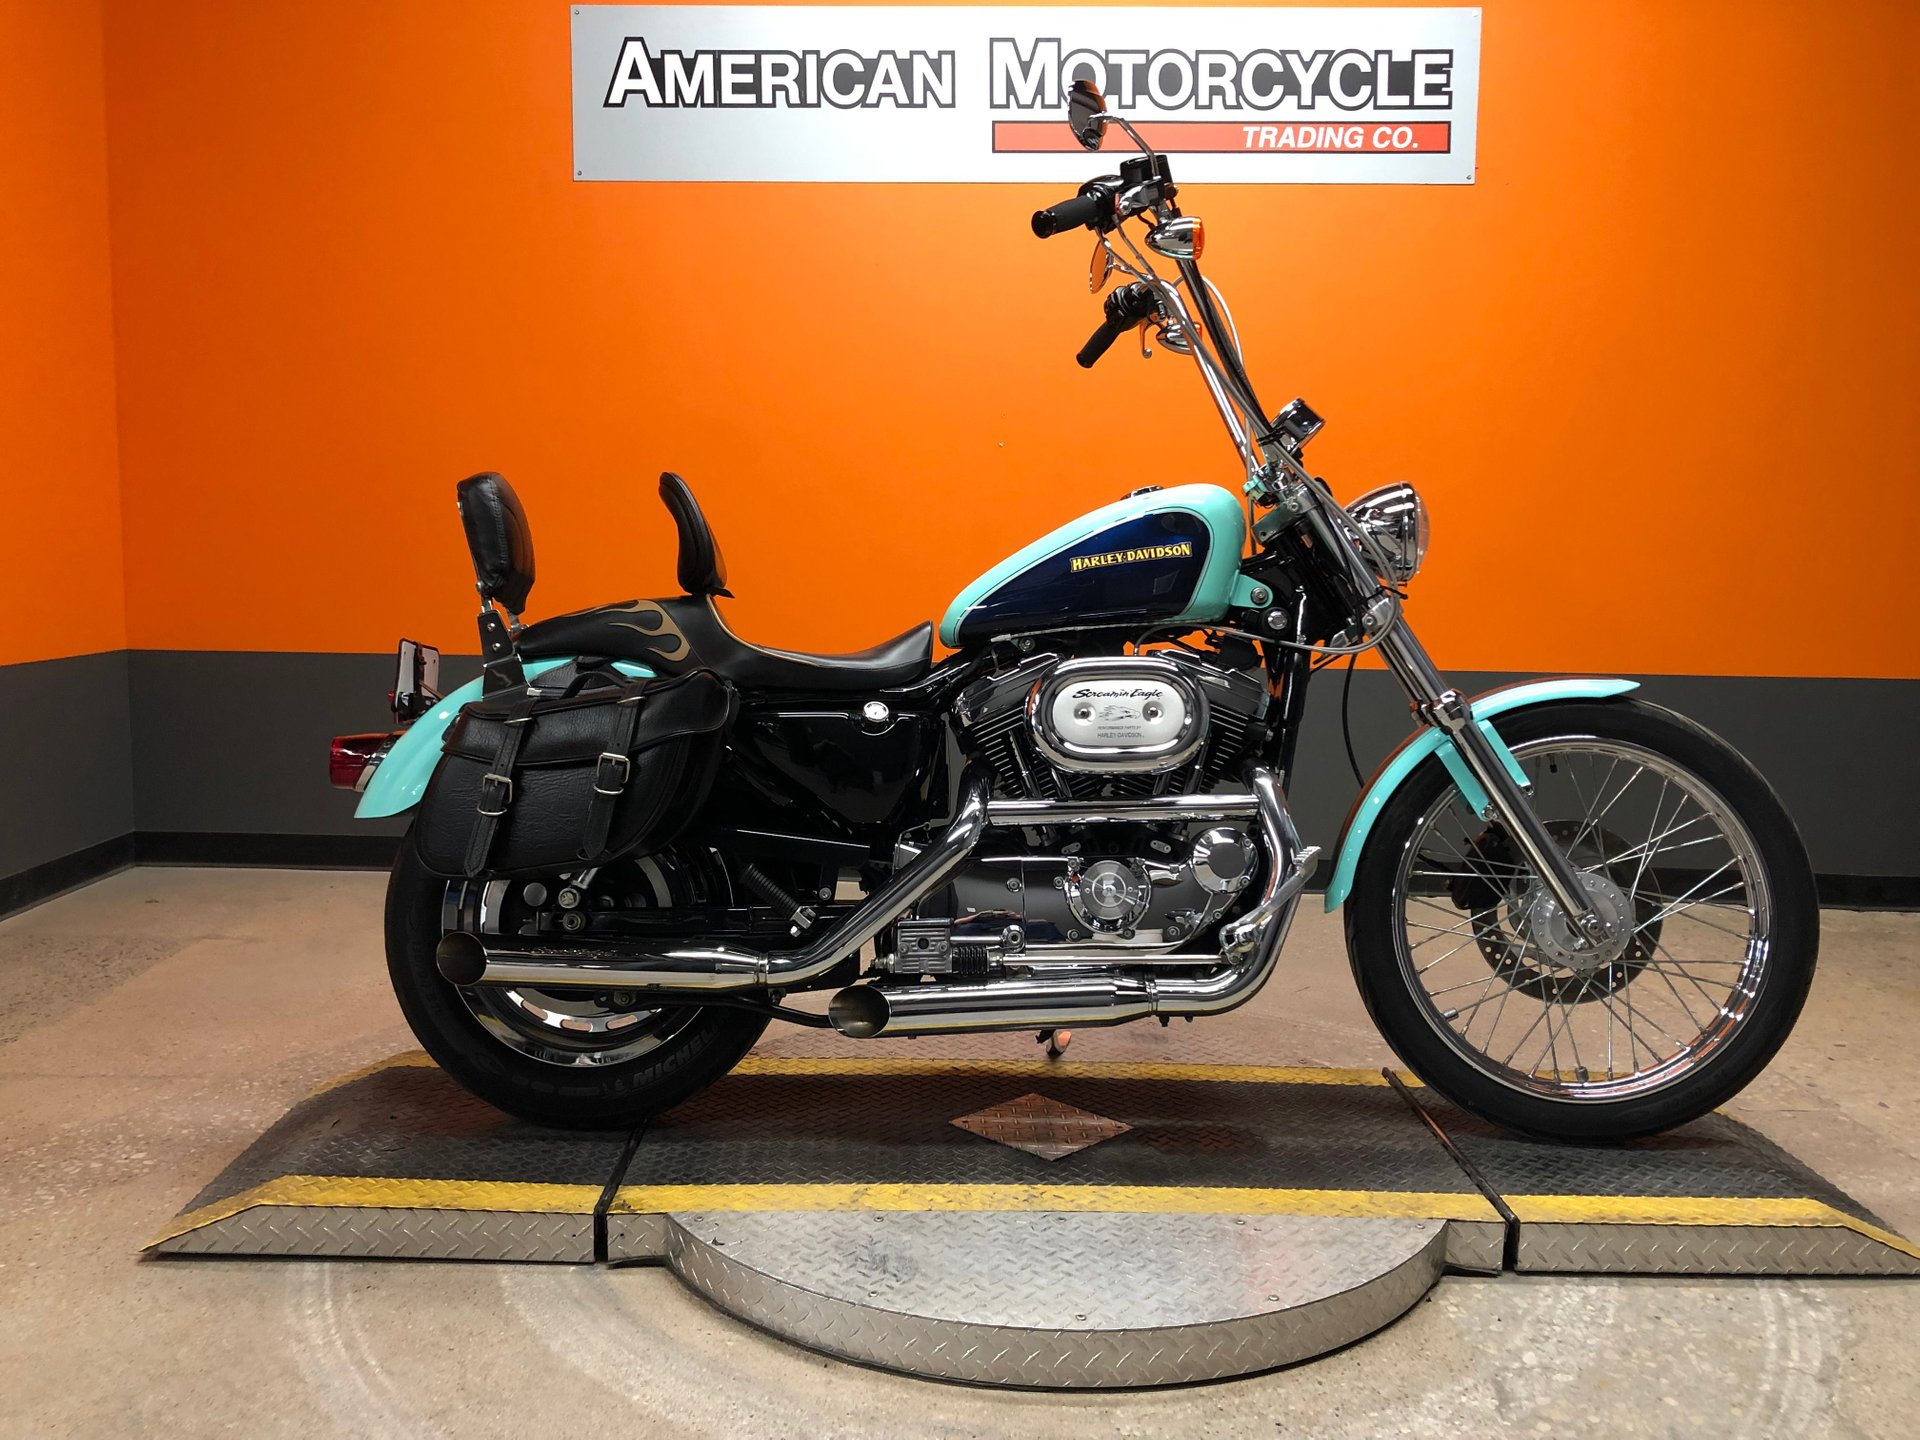 02 Harley-Davidson 1200 Sportster - $5000.00 - Uptown Imports